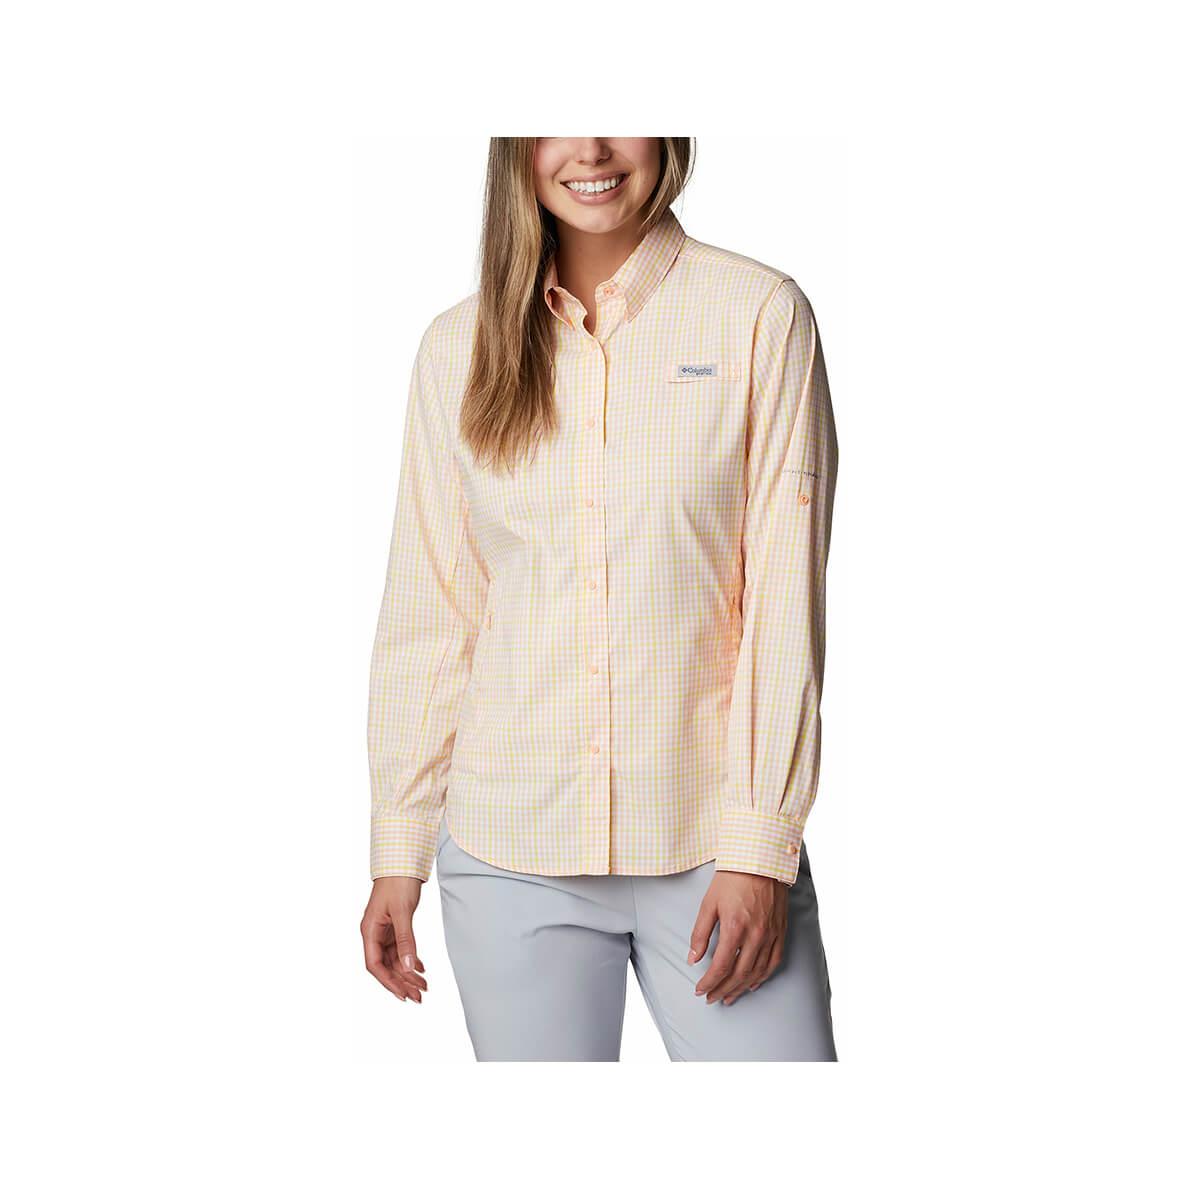  Women's Pfg Super Tamiami Long Sleeve Shirt